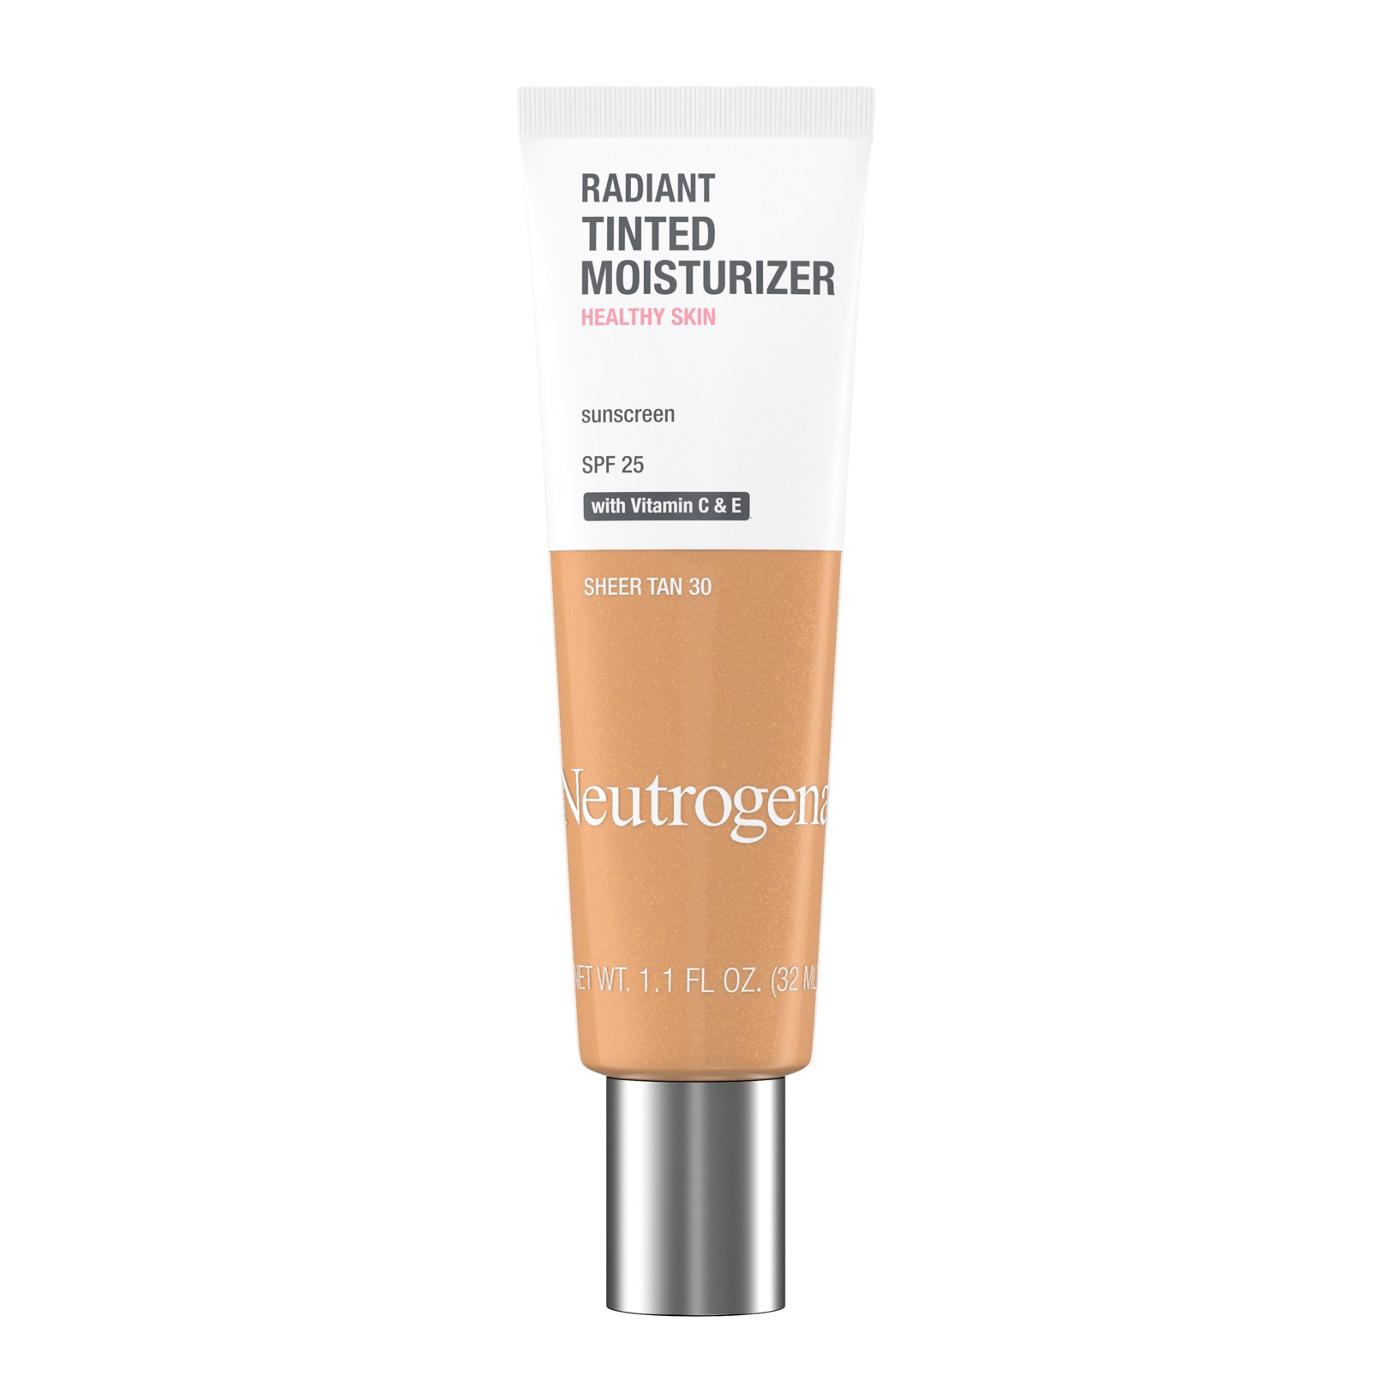 Neutrogena Healthy Skin Radiant Tinted Moisturizer Sheer Tan 30; image 1 of 2